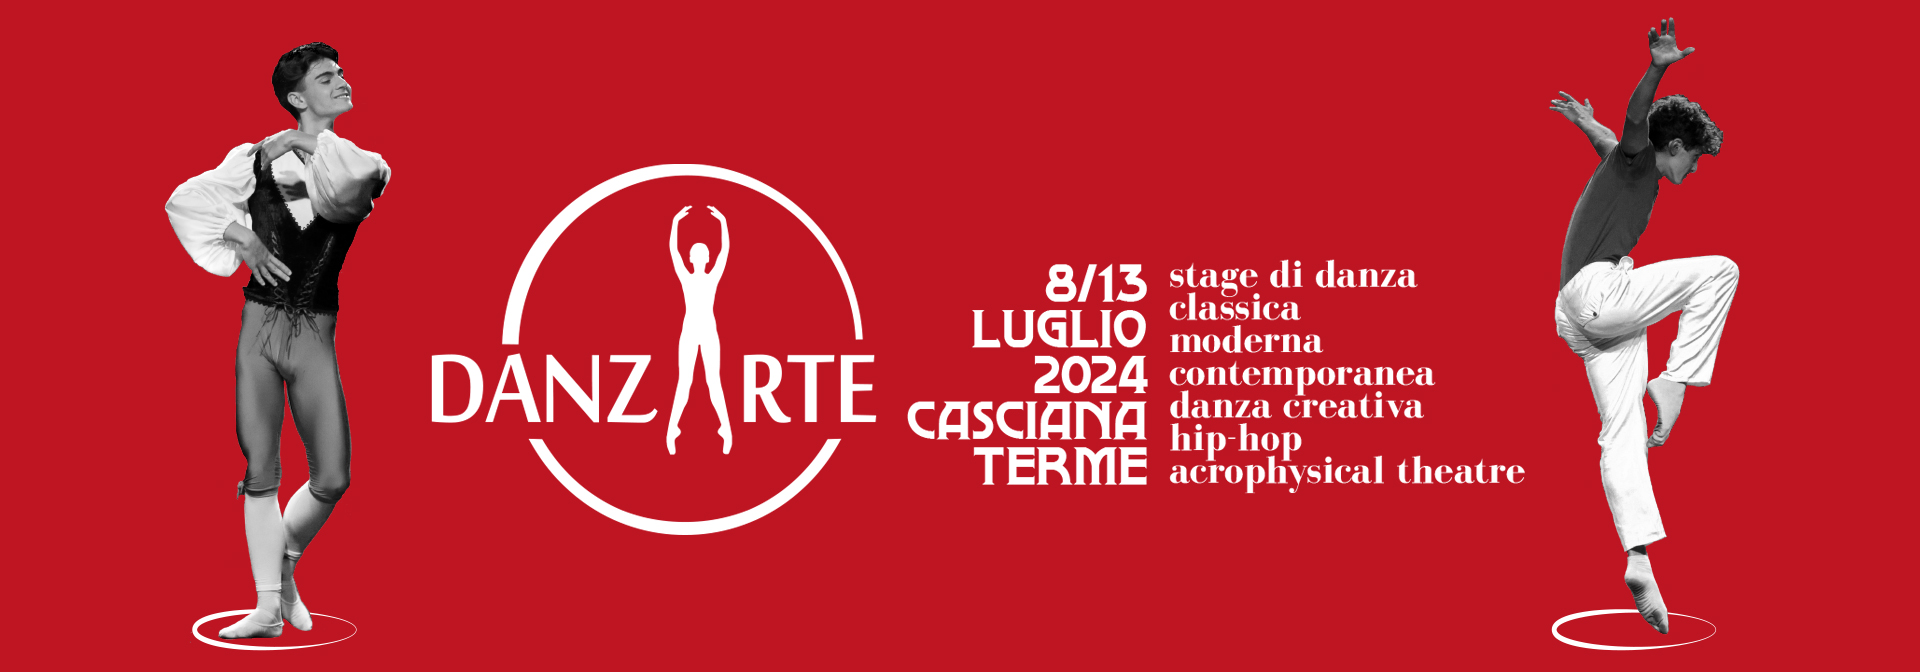 DanzArte Casciana Terme 2024